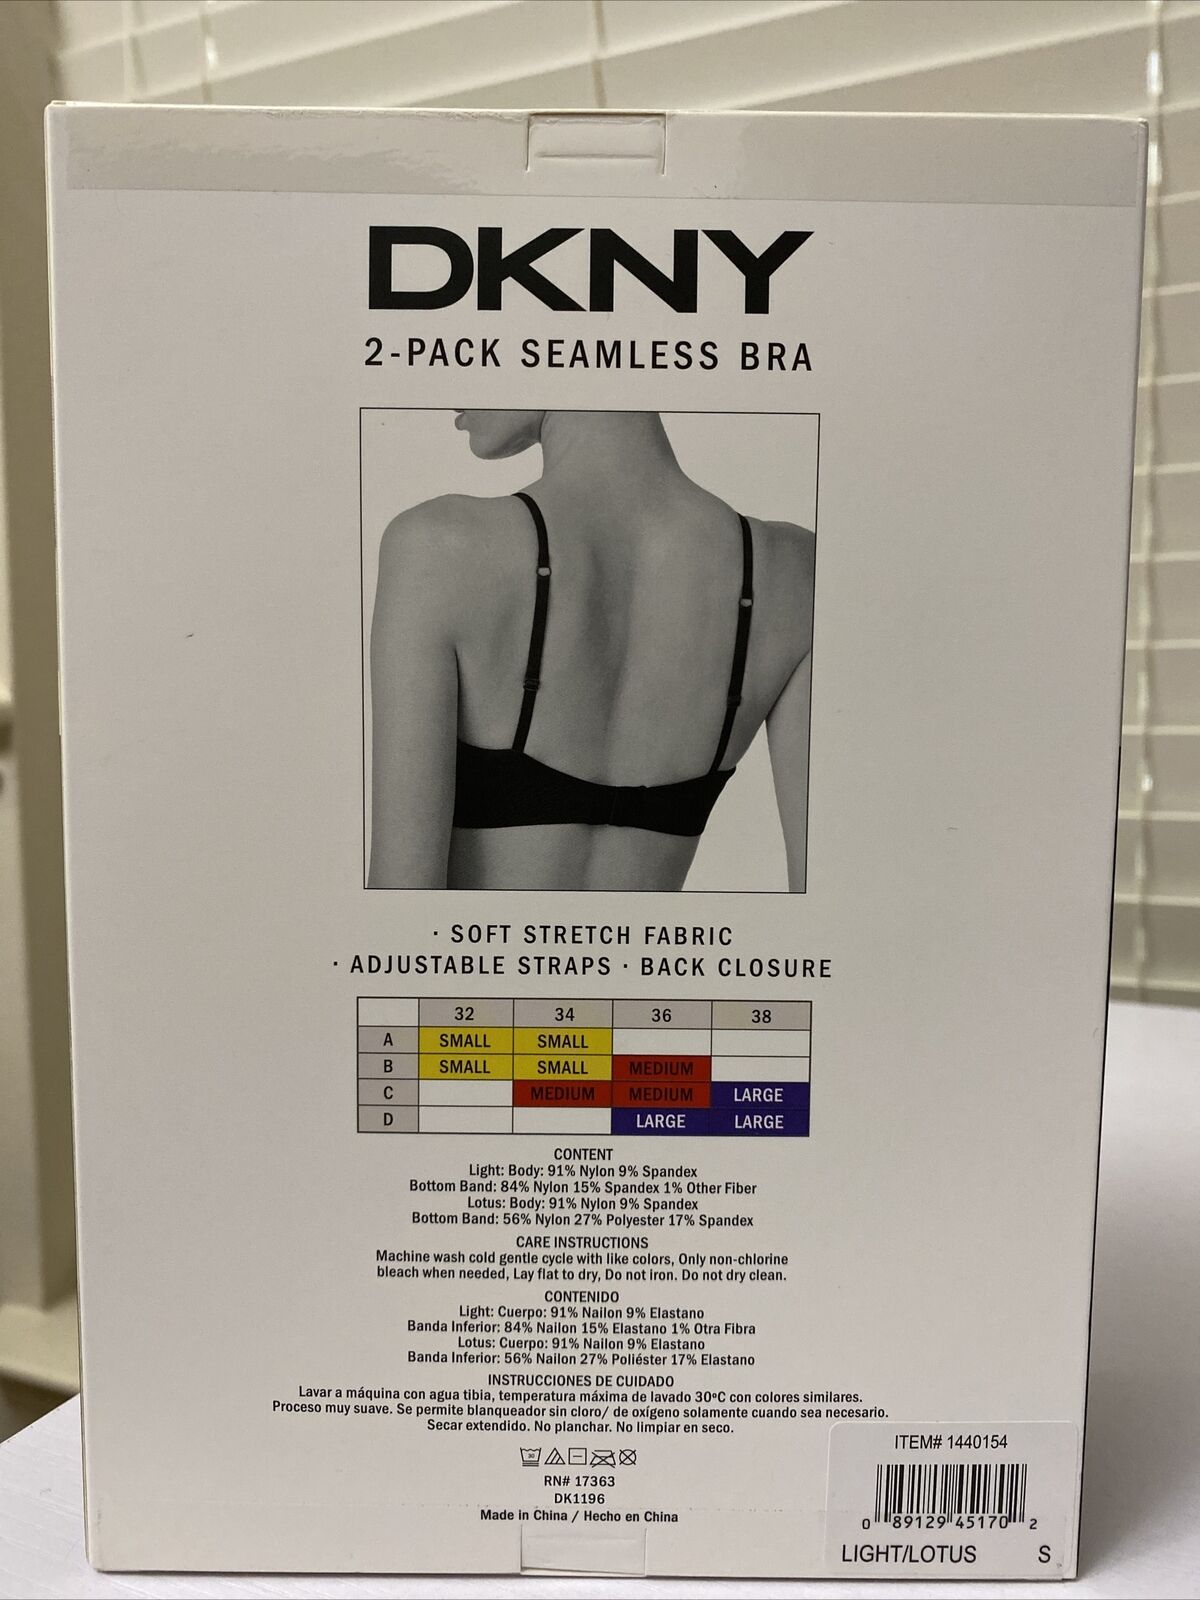 DKNY Women's Seamless Bra 2 Pack Light/Lotus